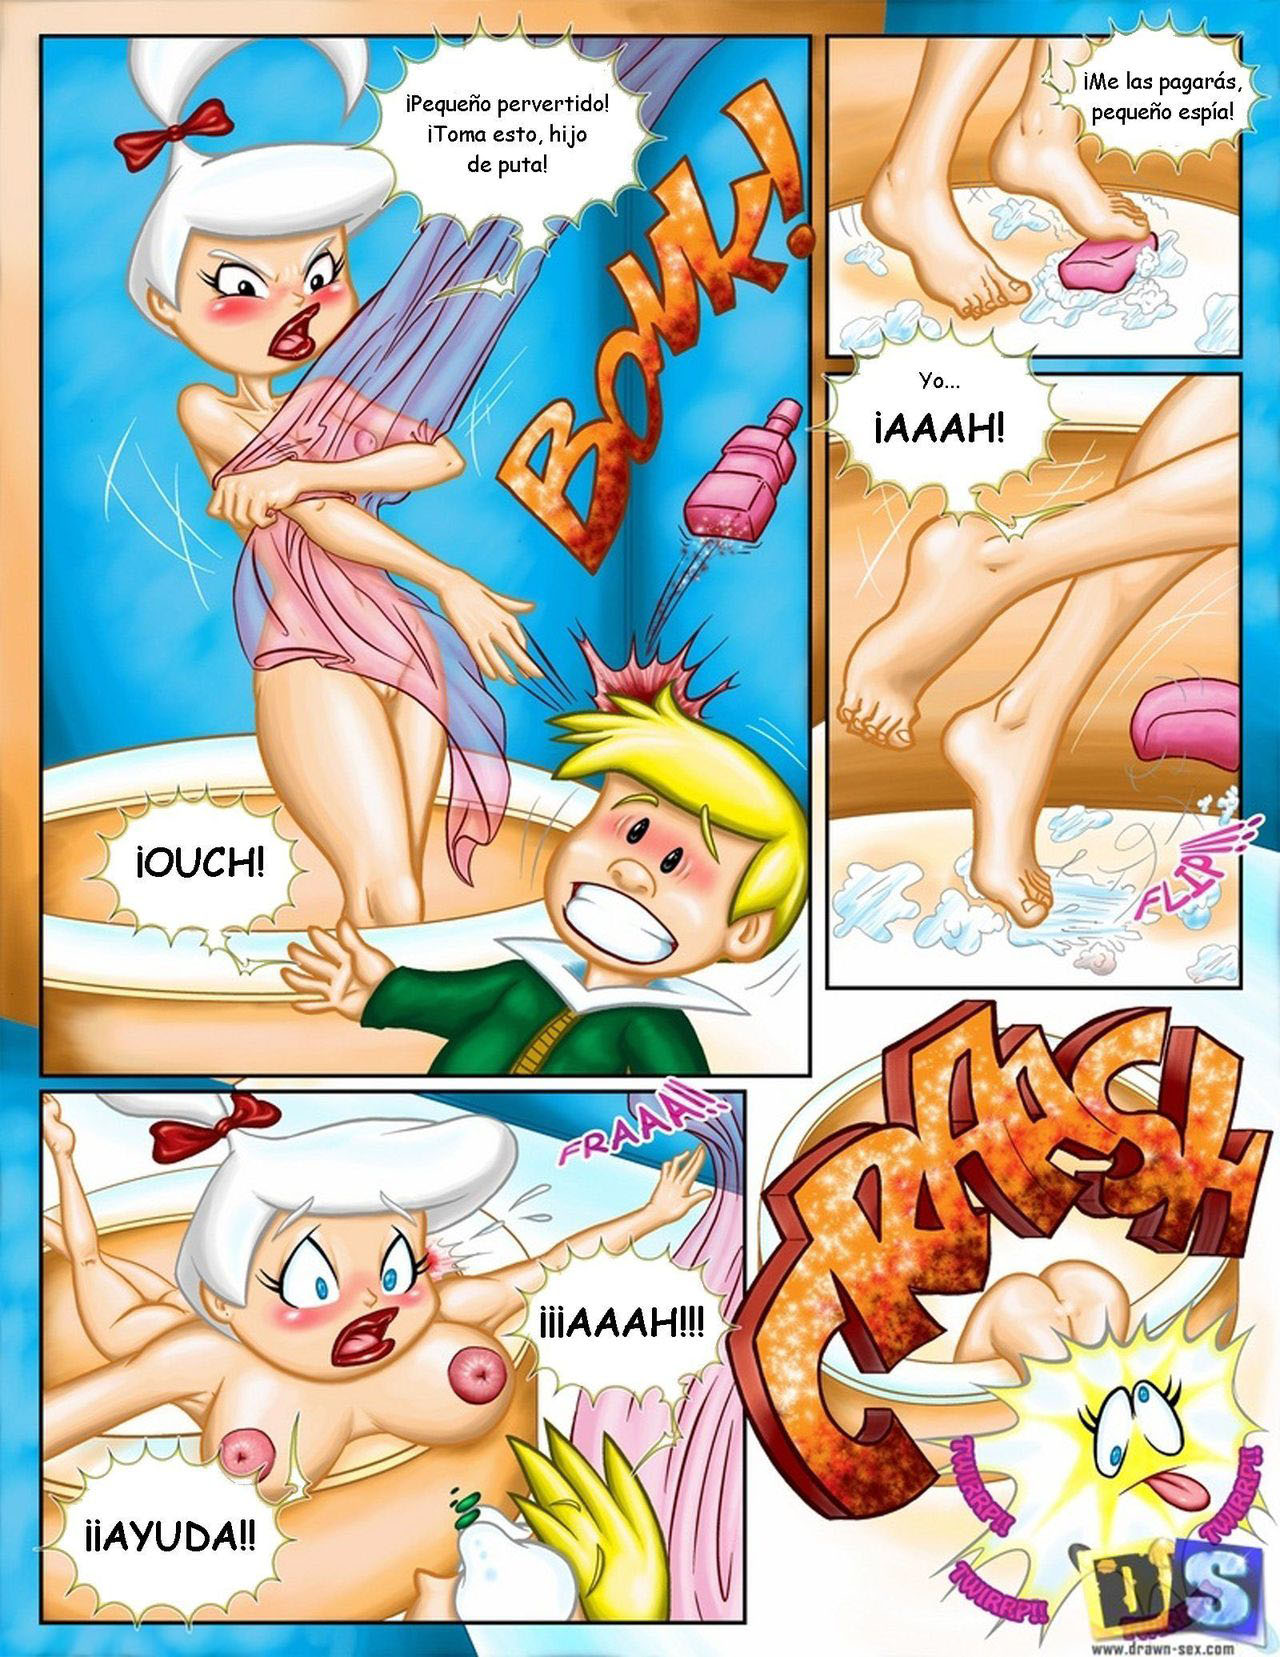 Judy es muy mal Engañada - 3 - Comics Porno - Hentai Manga - Cartoon XXX